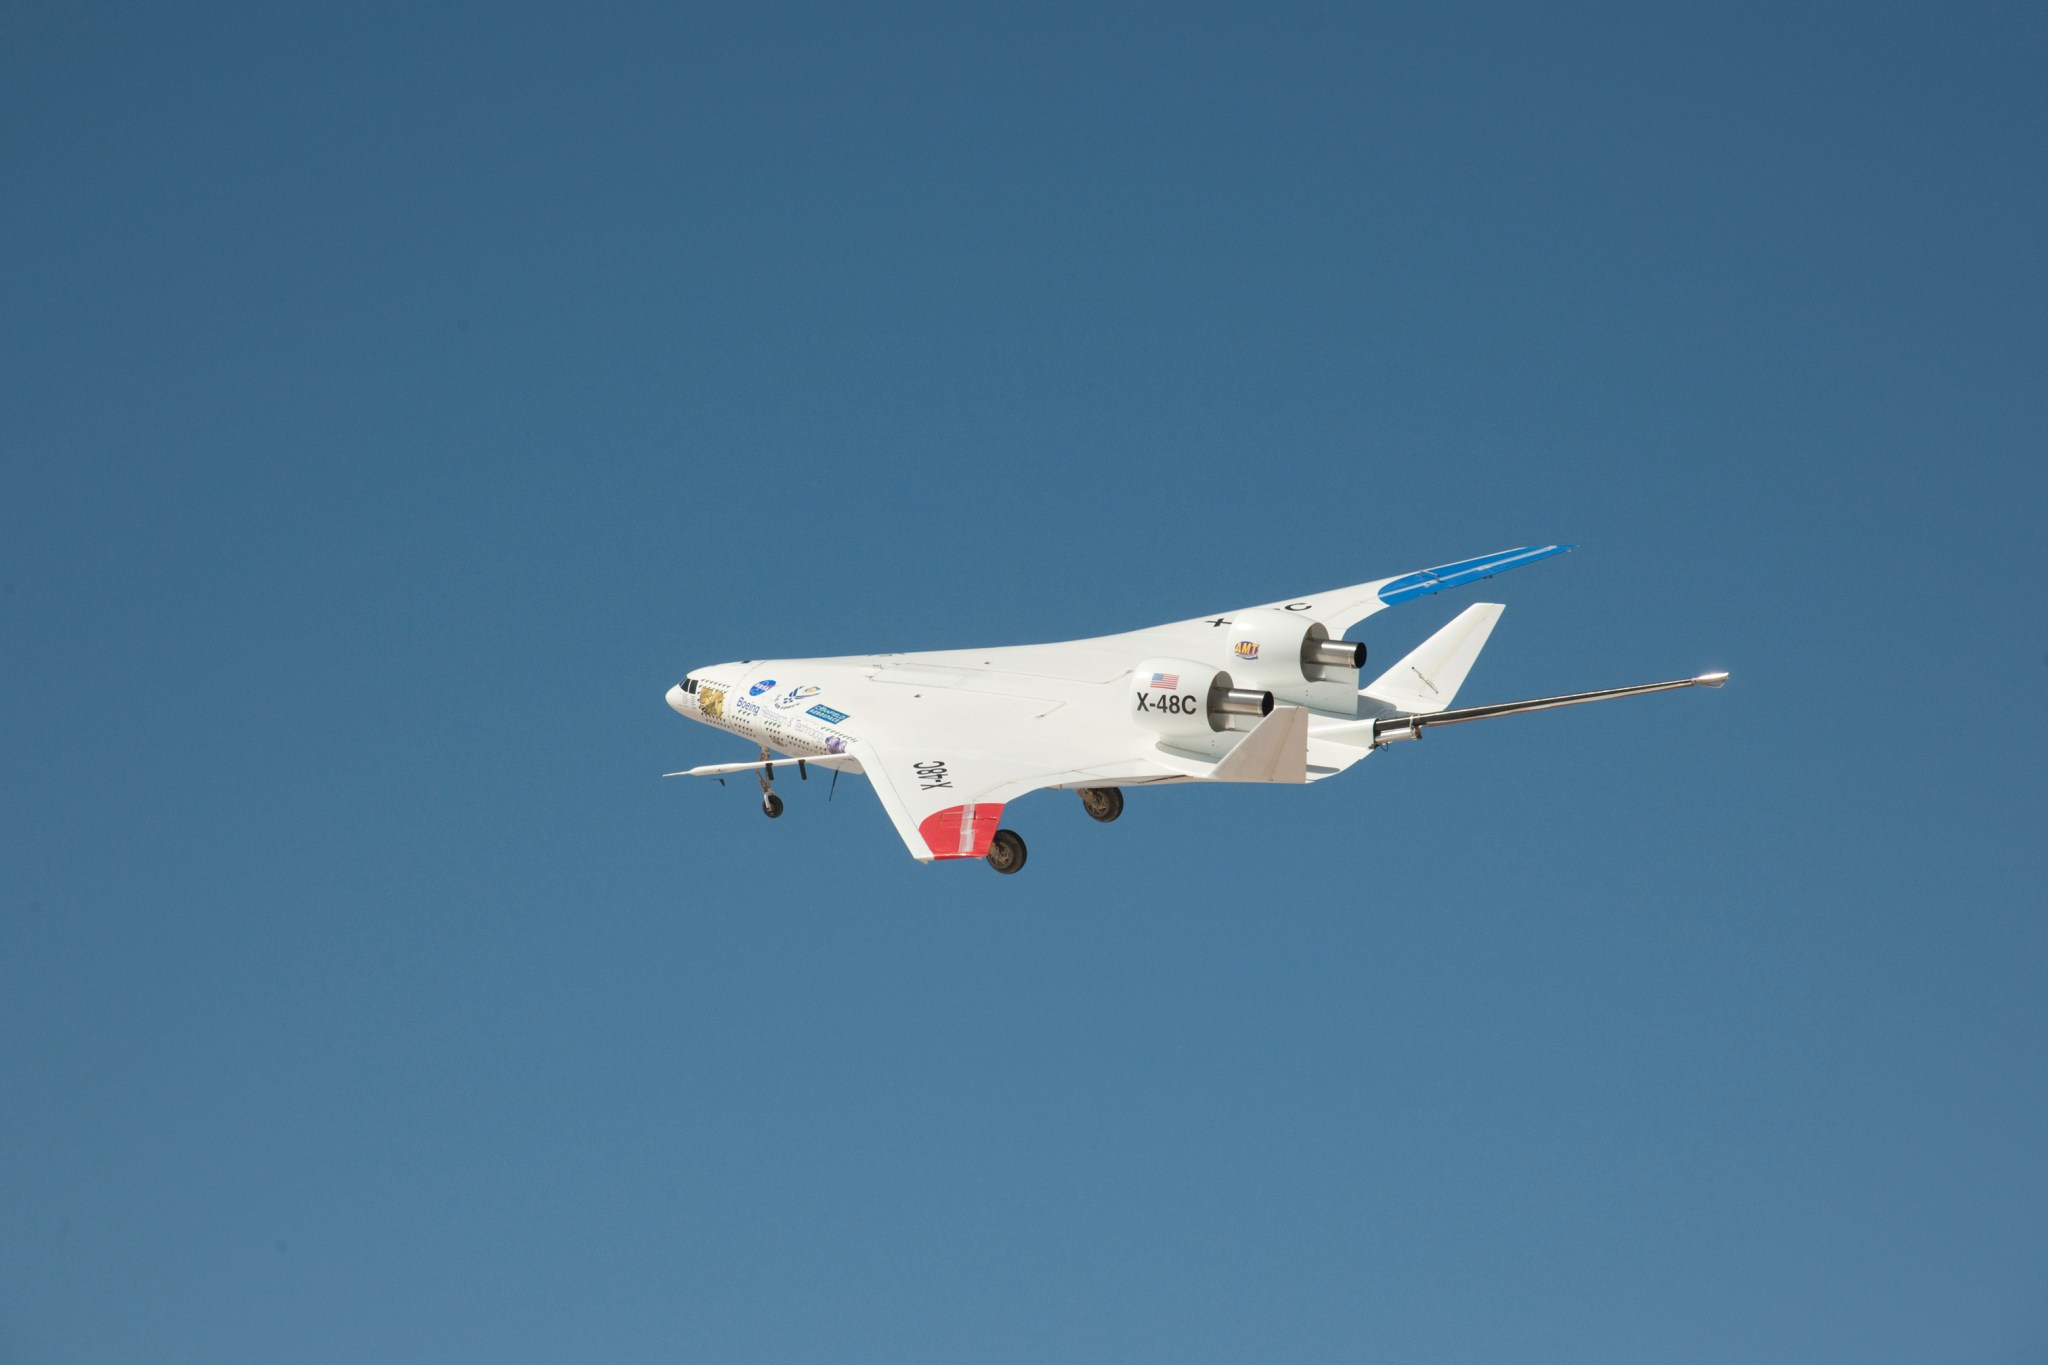 NASA-Boeing X-48C Hybrid Wing Body aircraft in flight against blue skies.